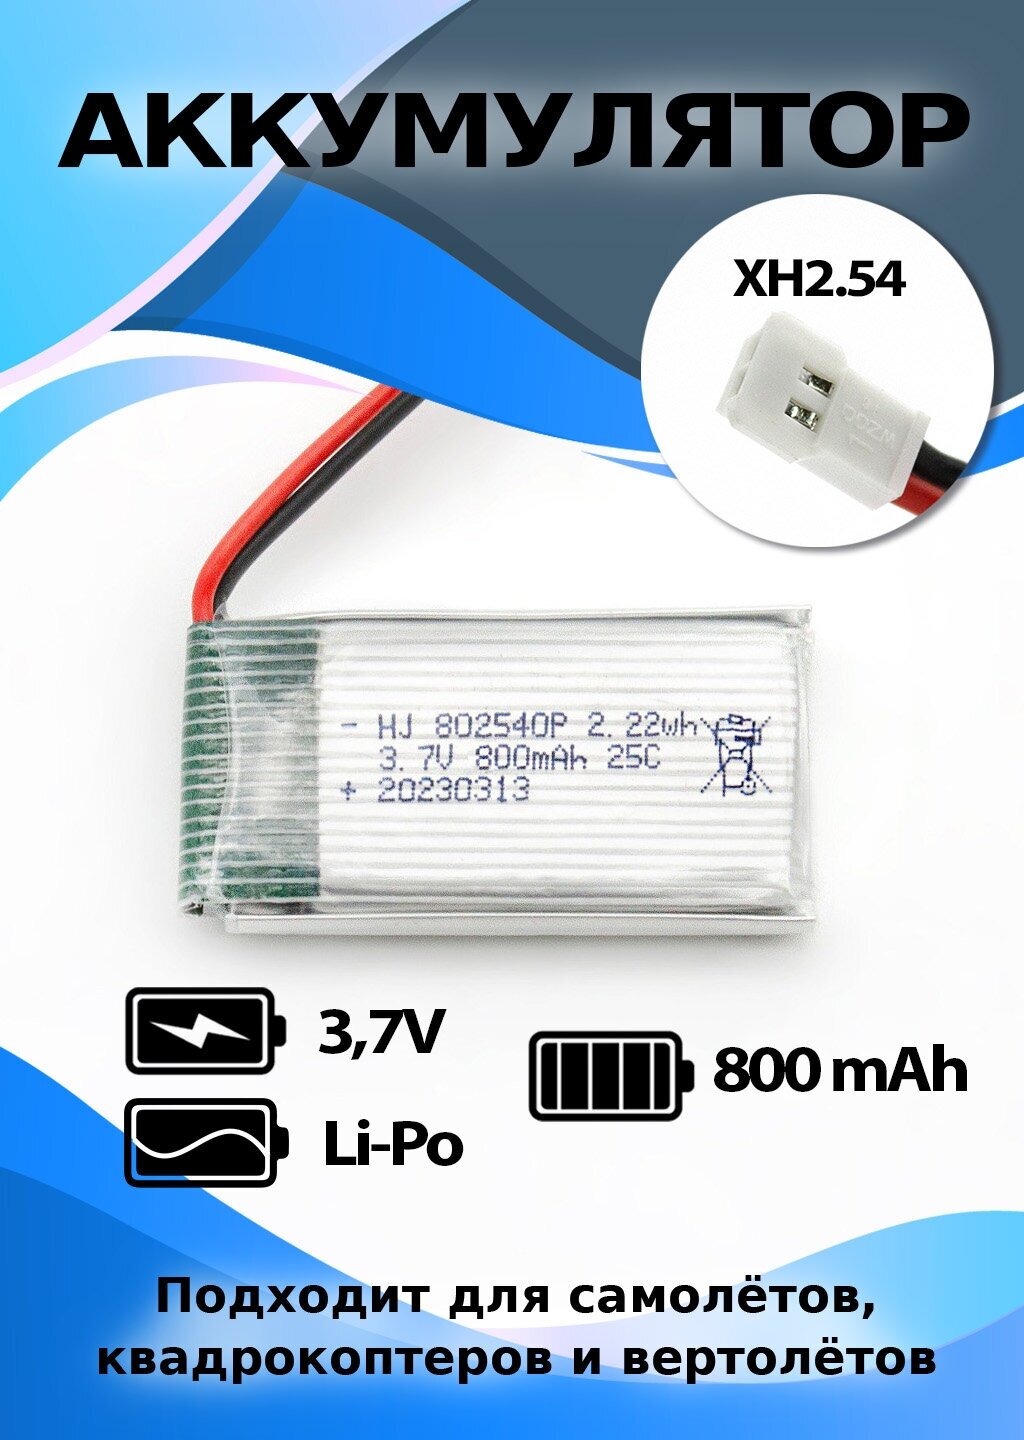 Аккумулятор литий-полимерный Li-Po 902540 3,7В 800мАч XH2.54